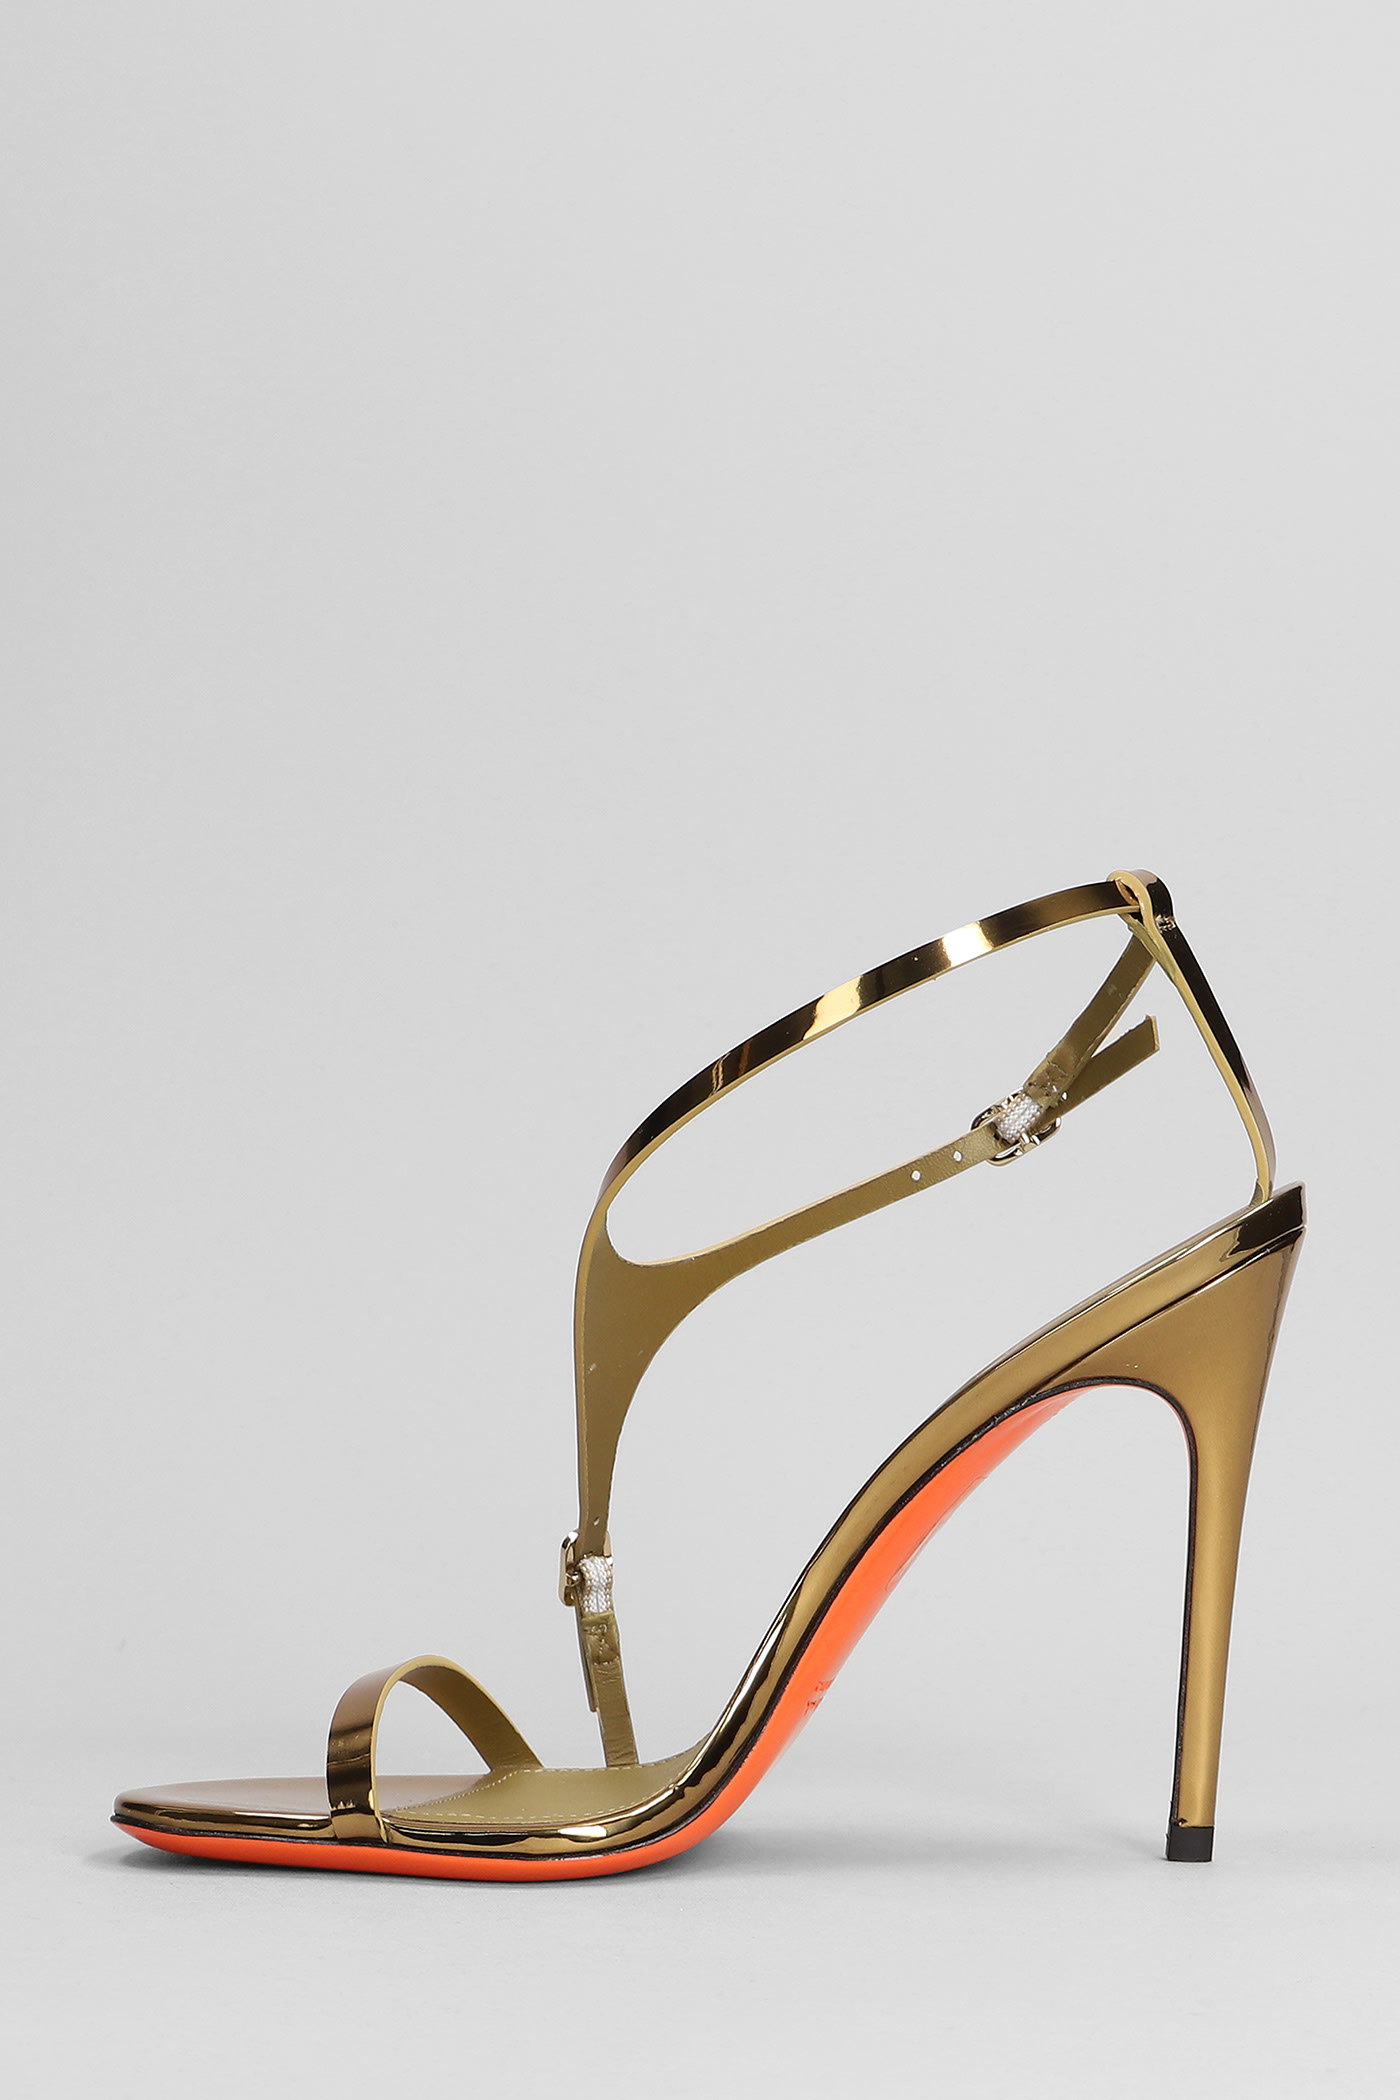 Santoni Hinata Sandals In Gold Leather | ModeSens